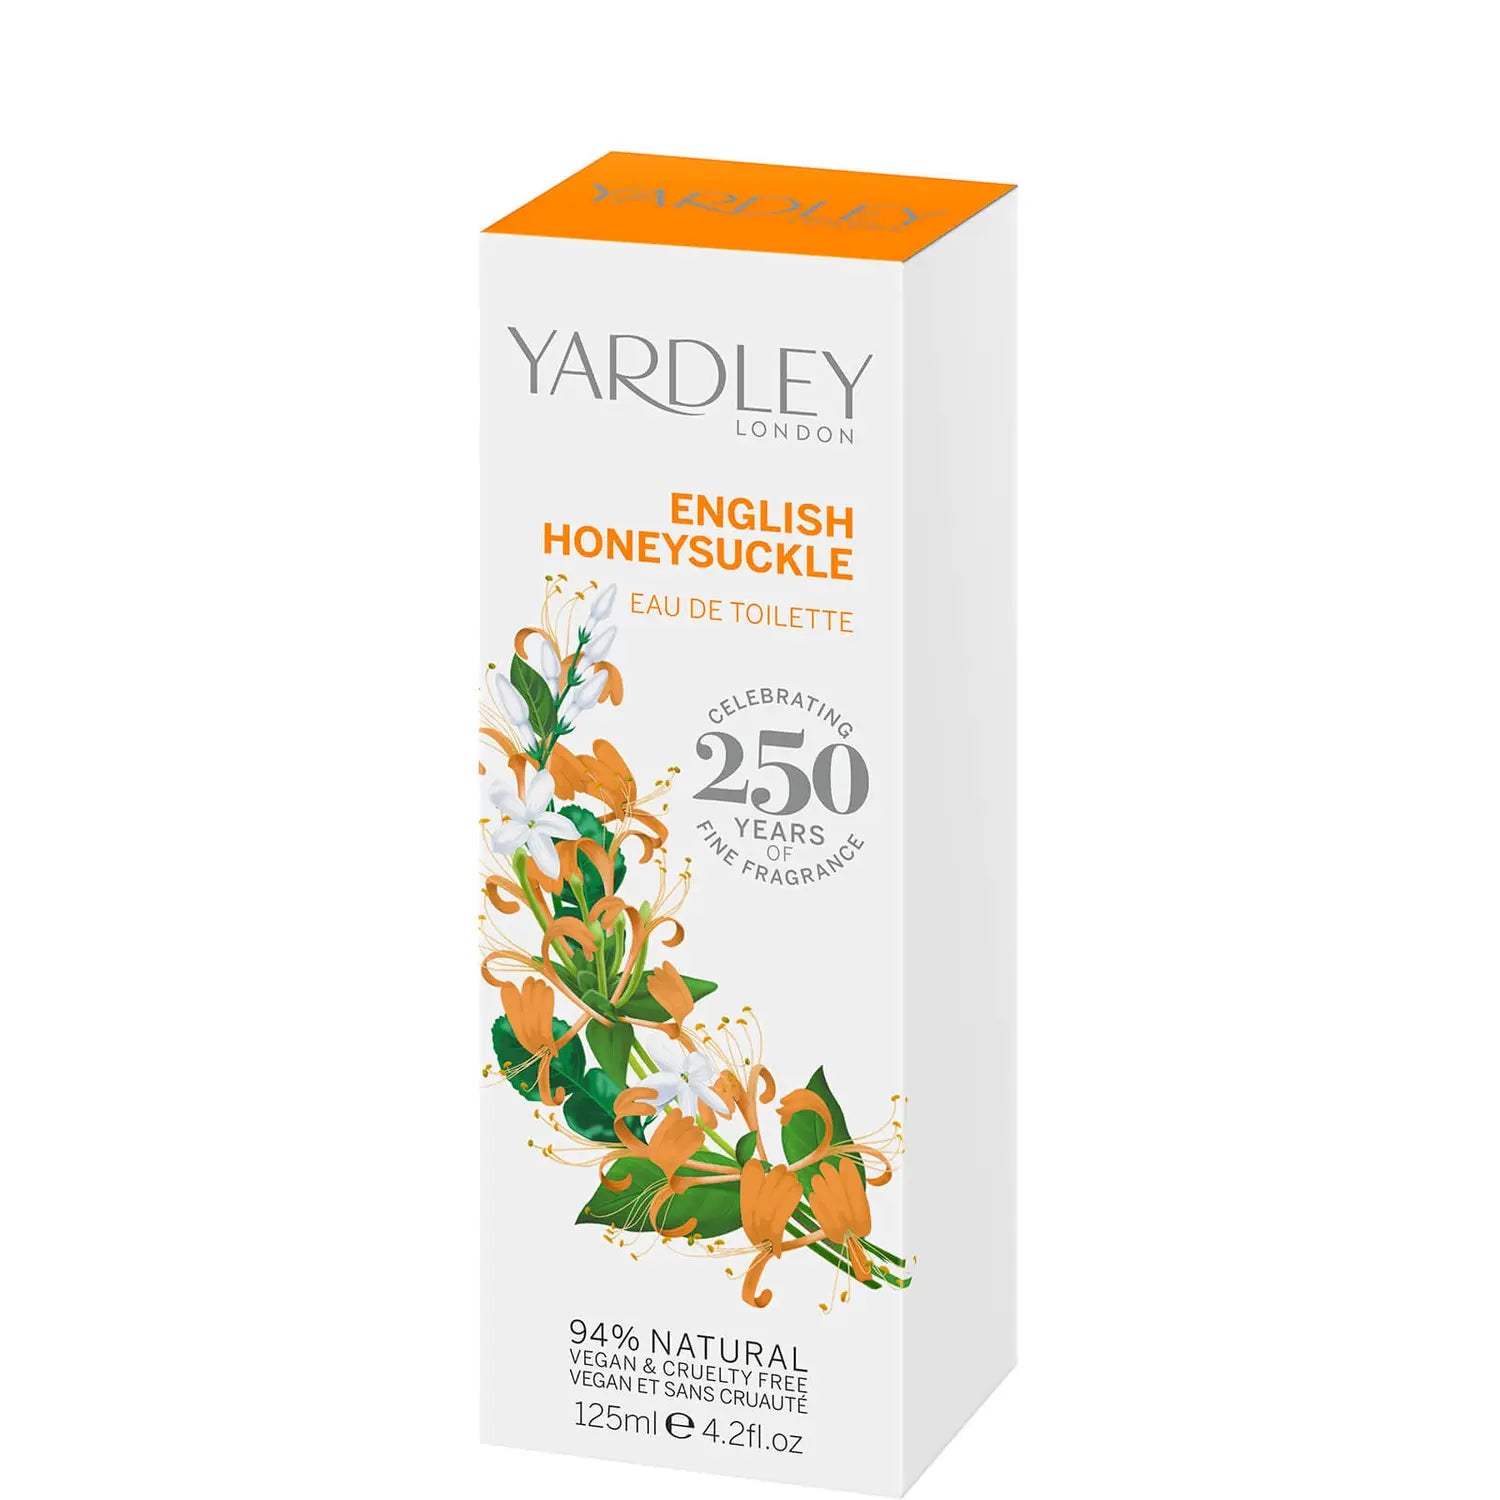 Yardley English Honeysuckle Eau de Toilette 125ml